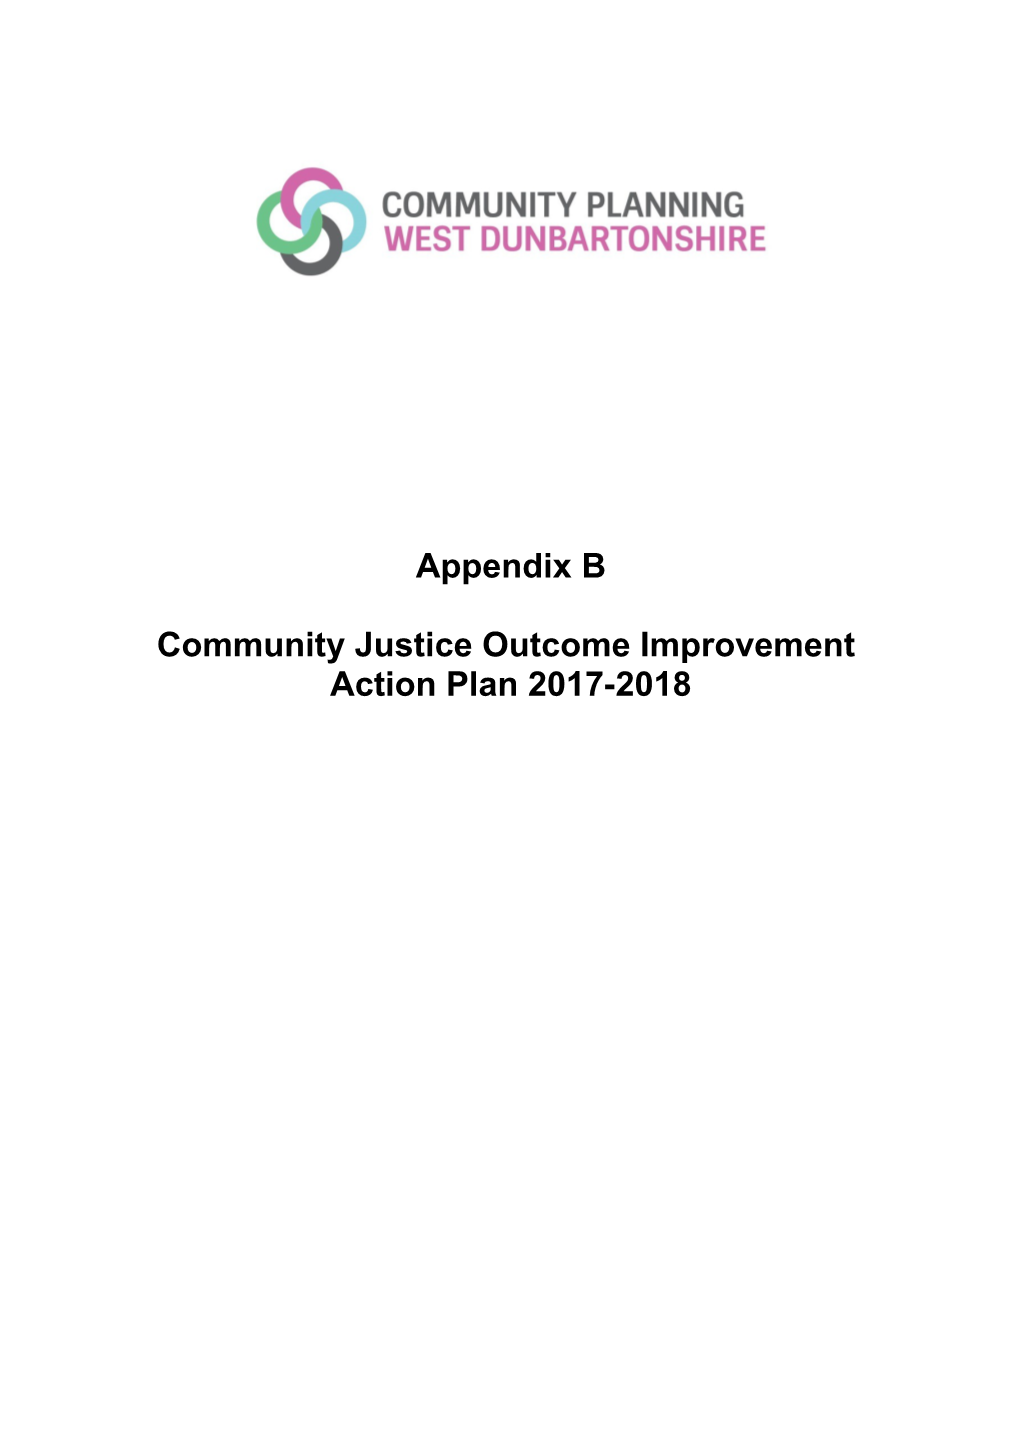 West Dunbartonshire Community Justice Implementation Action Plan